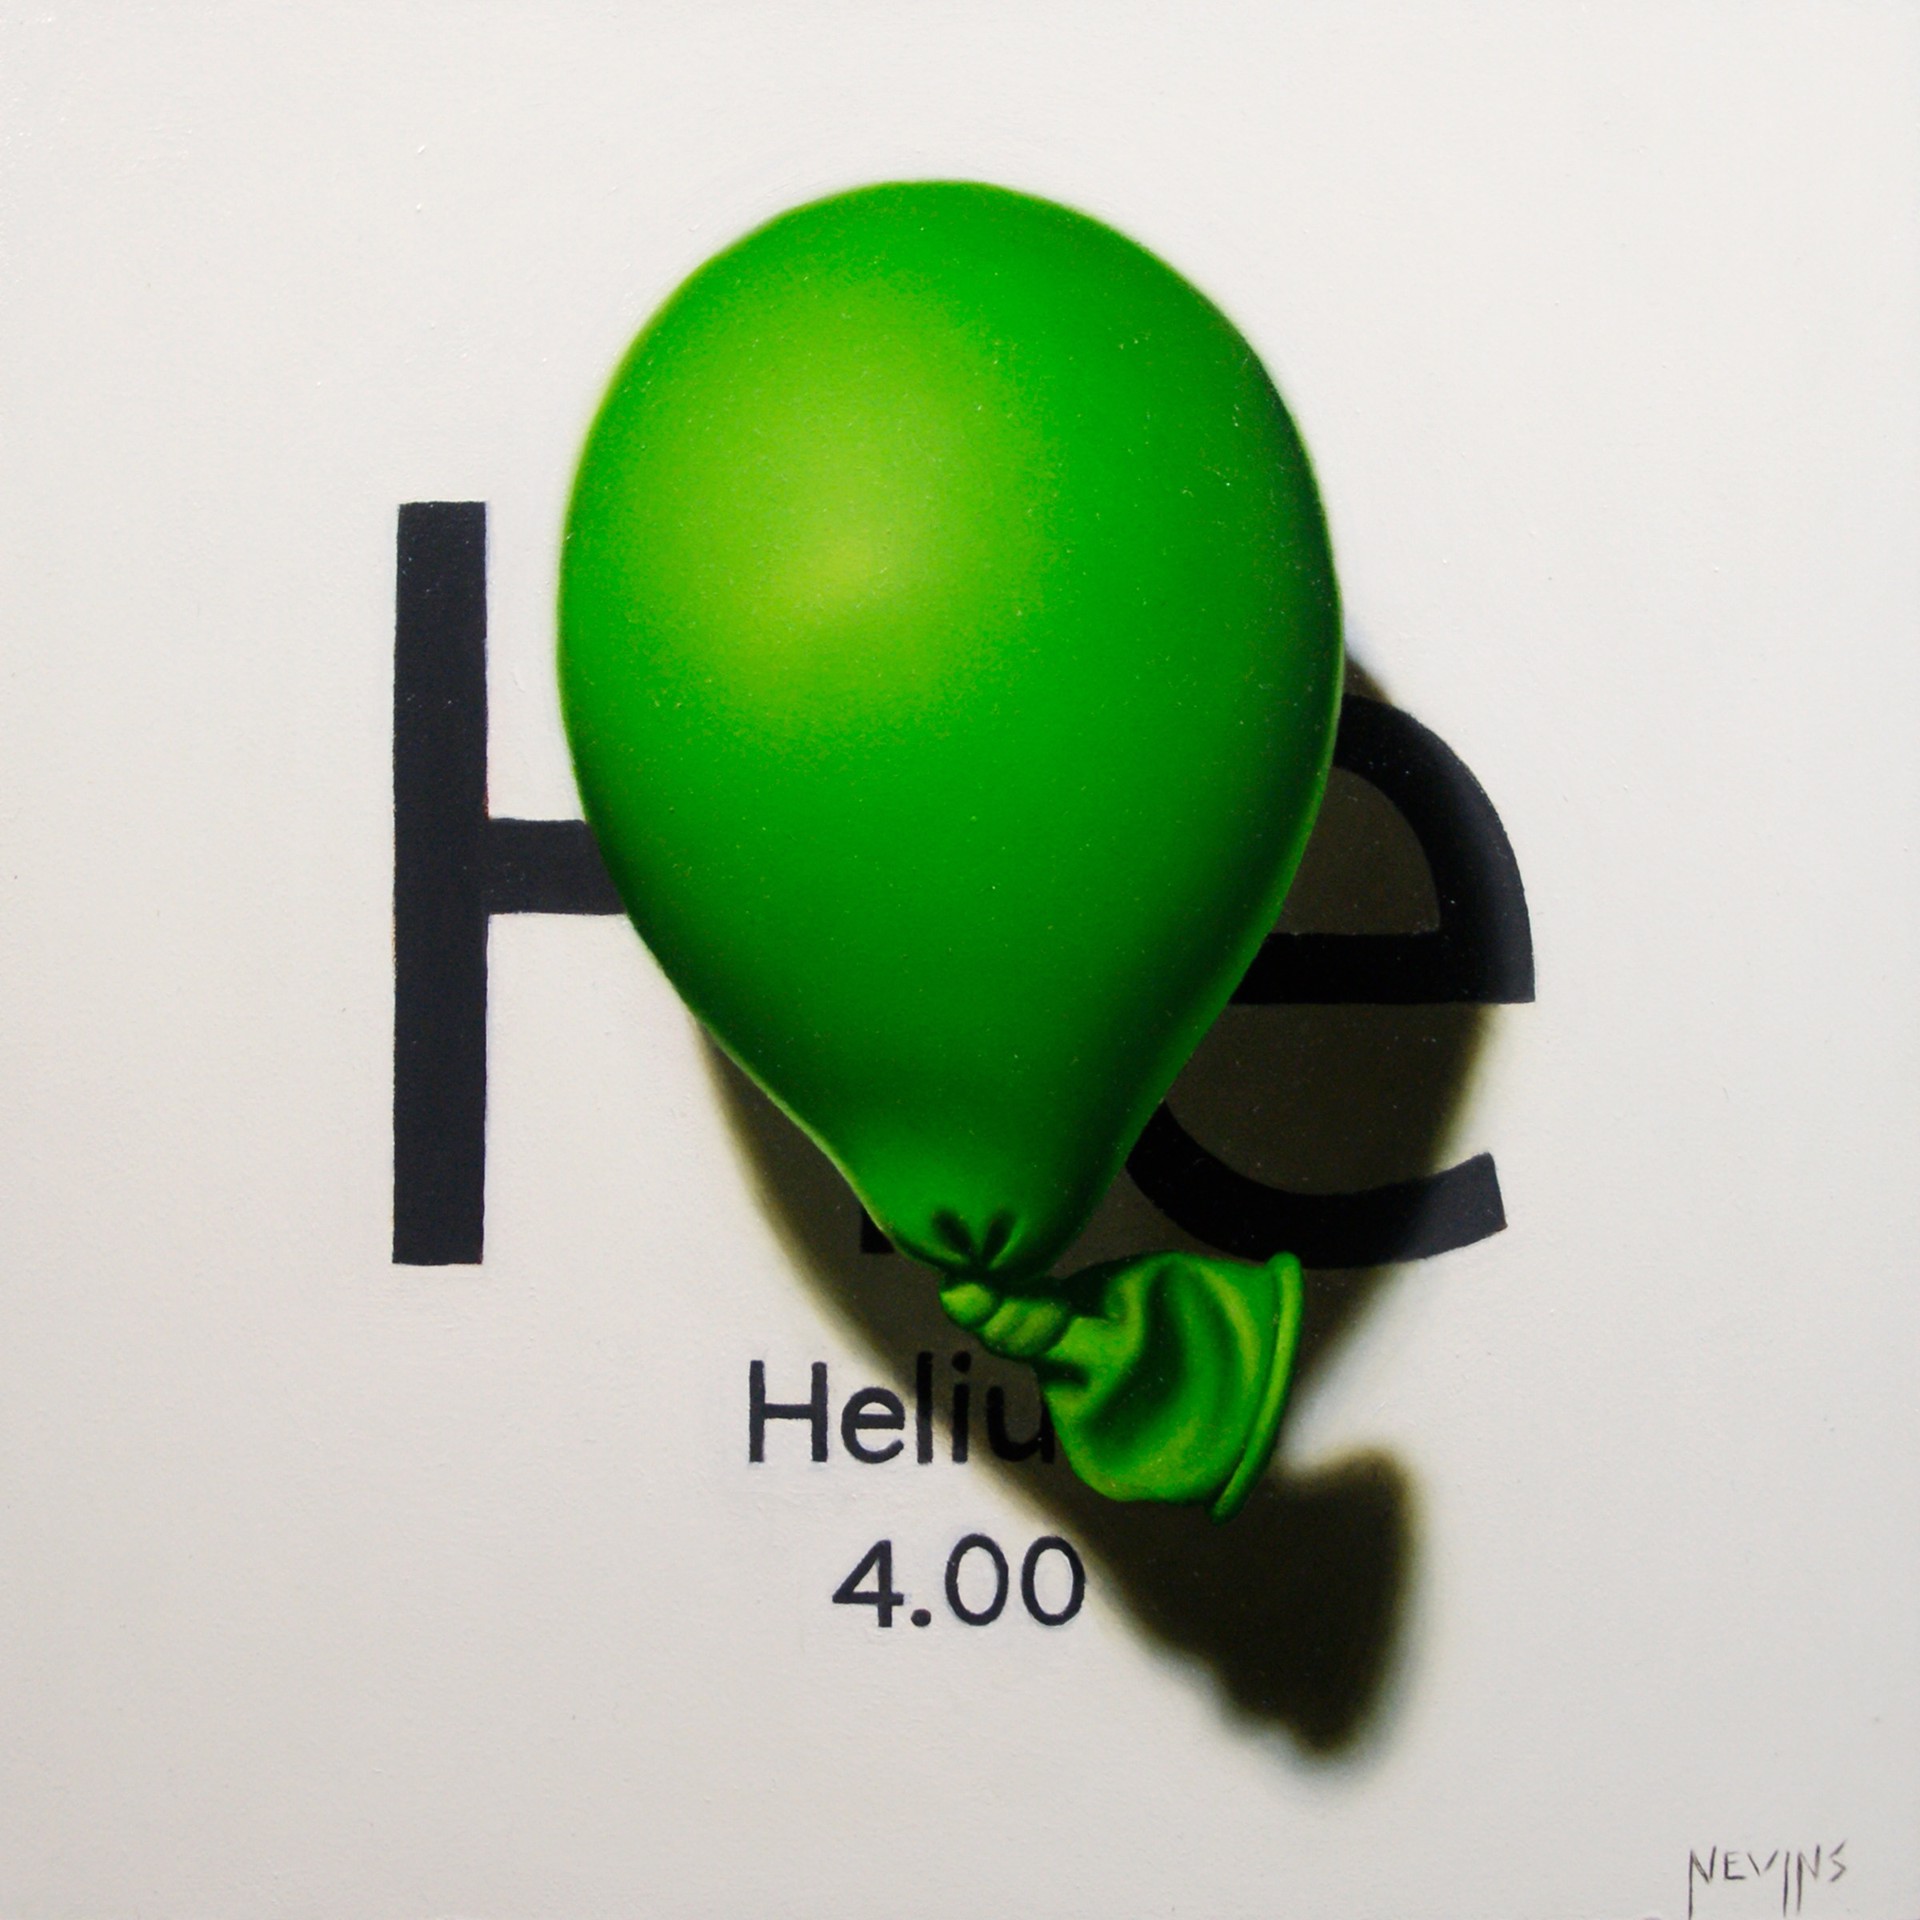 Helium by Patrick Nevins